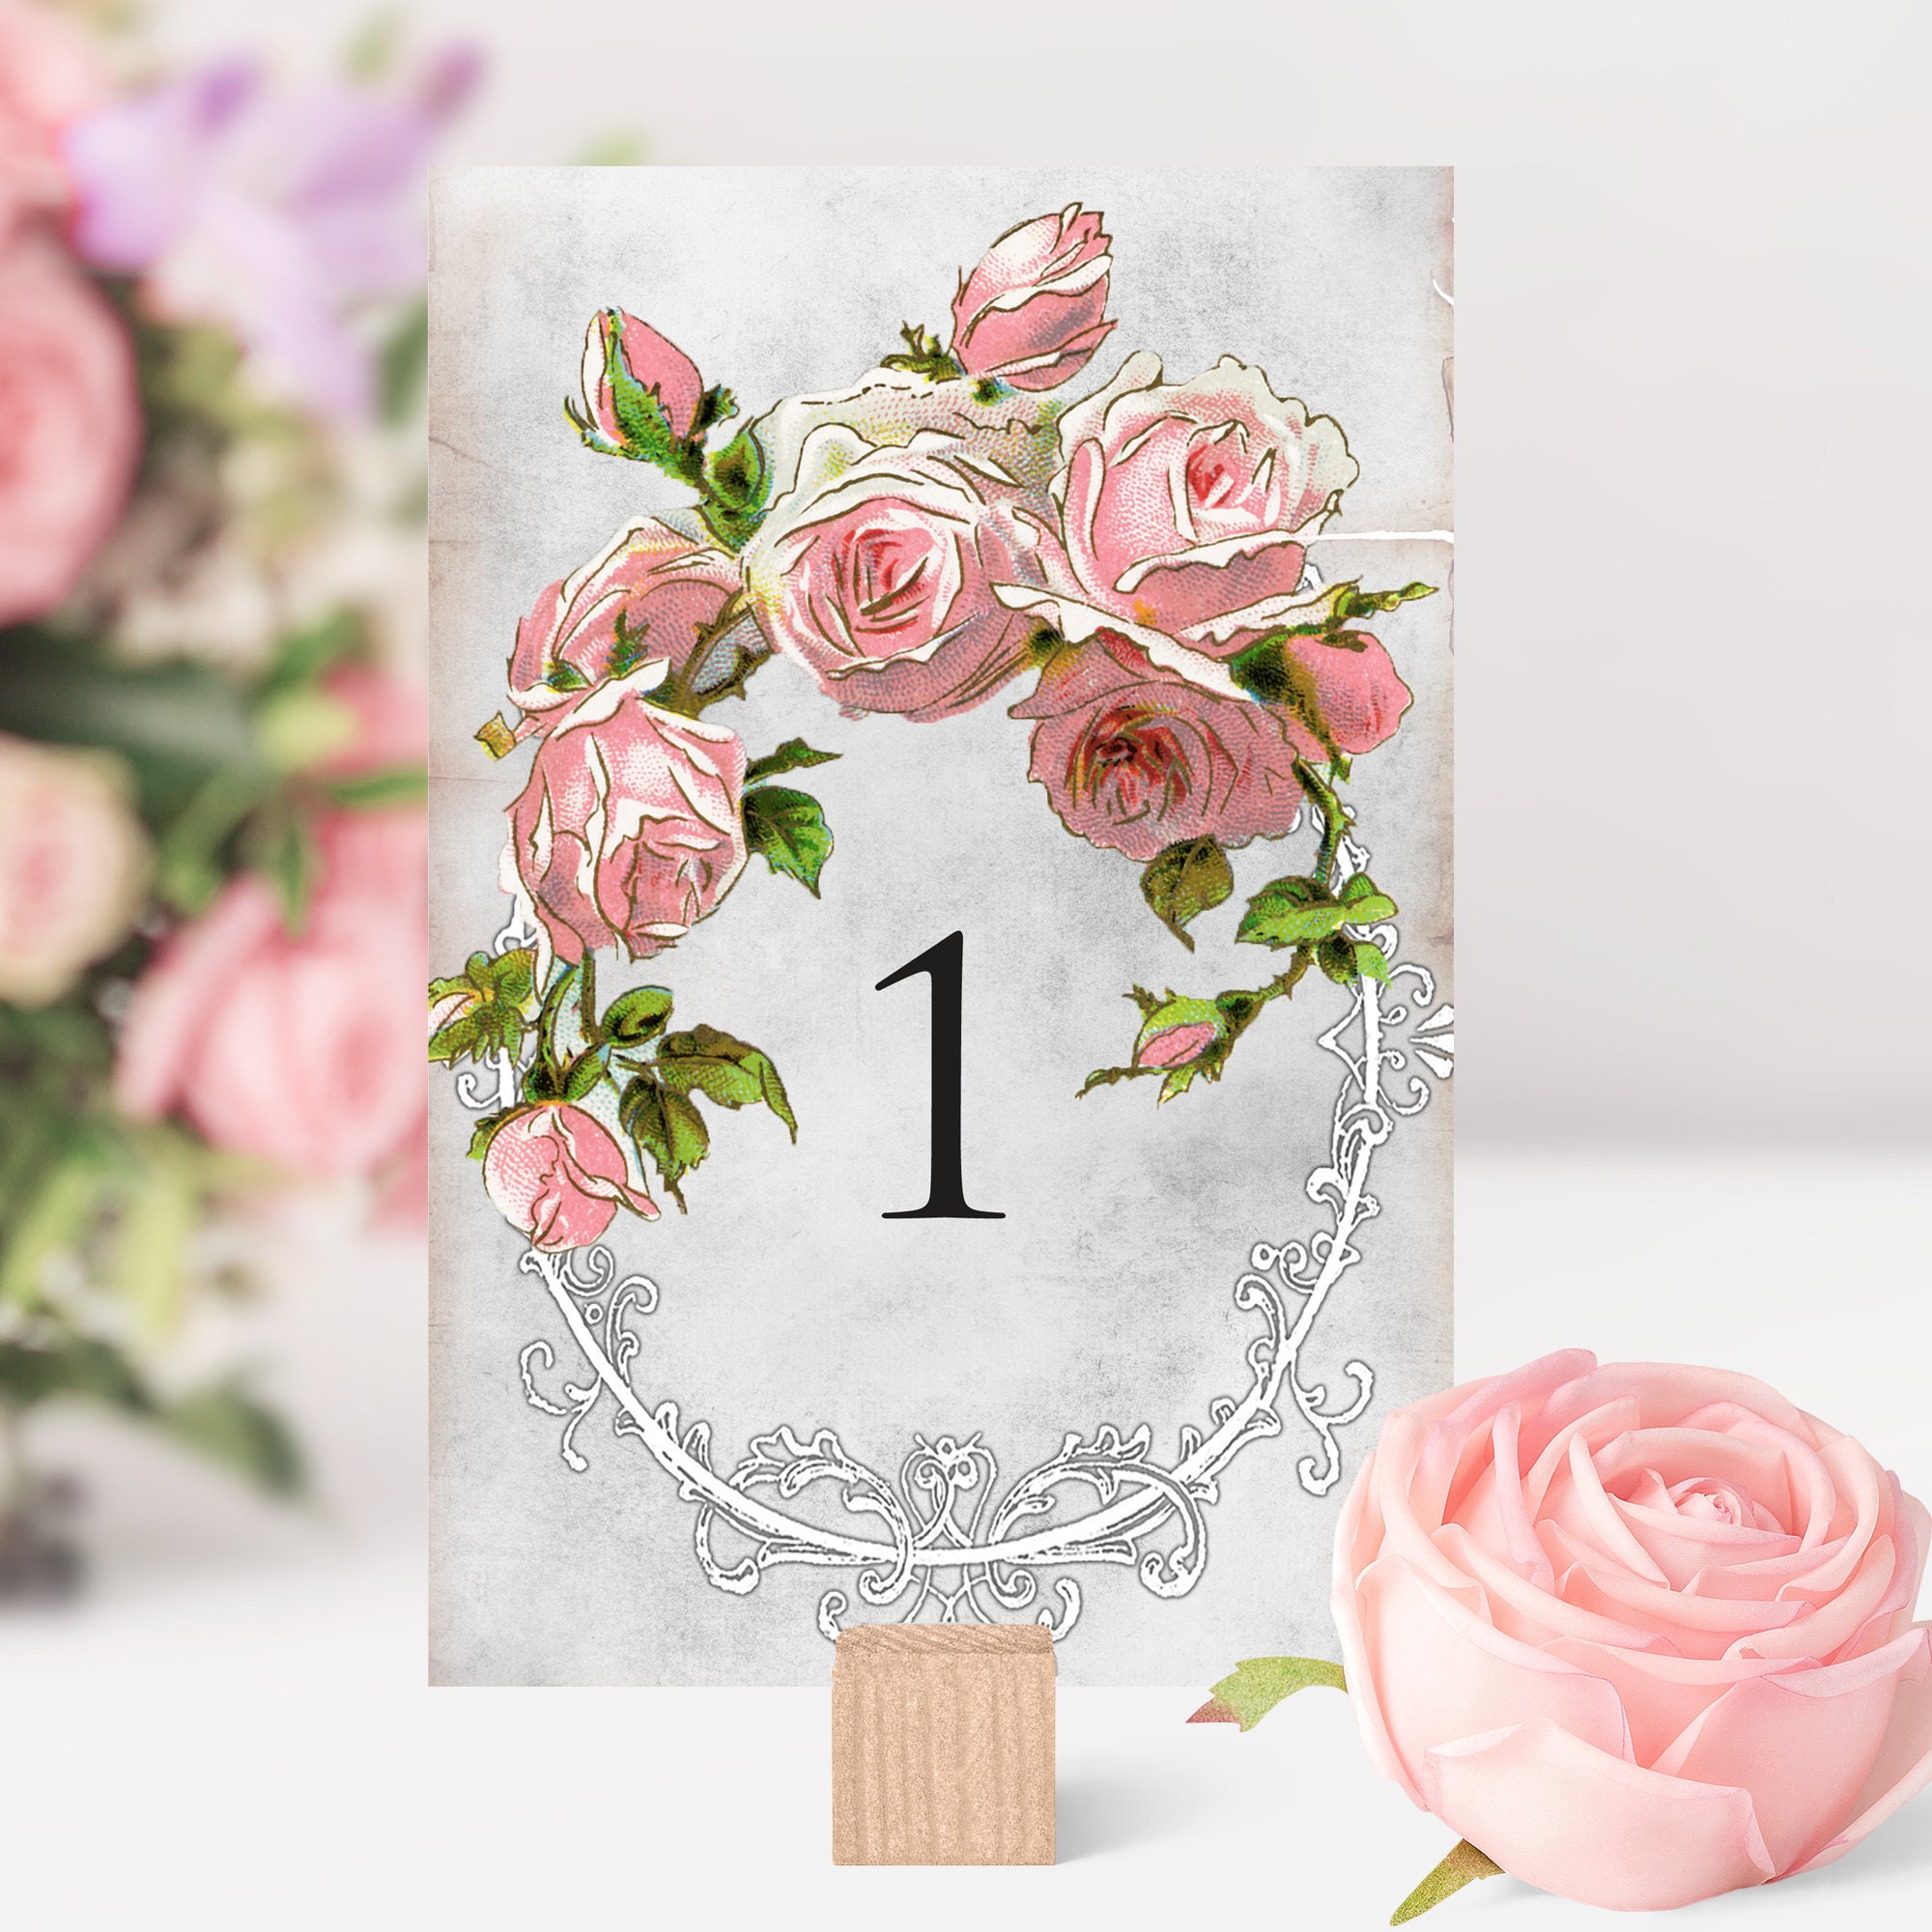 Wedding Birthday Christening Baby Shower Vintage Rose Floral Table Number Cards 